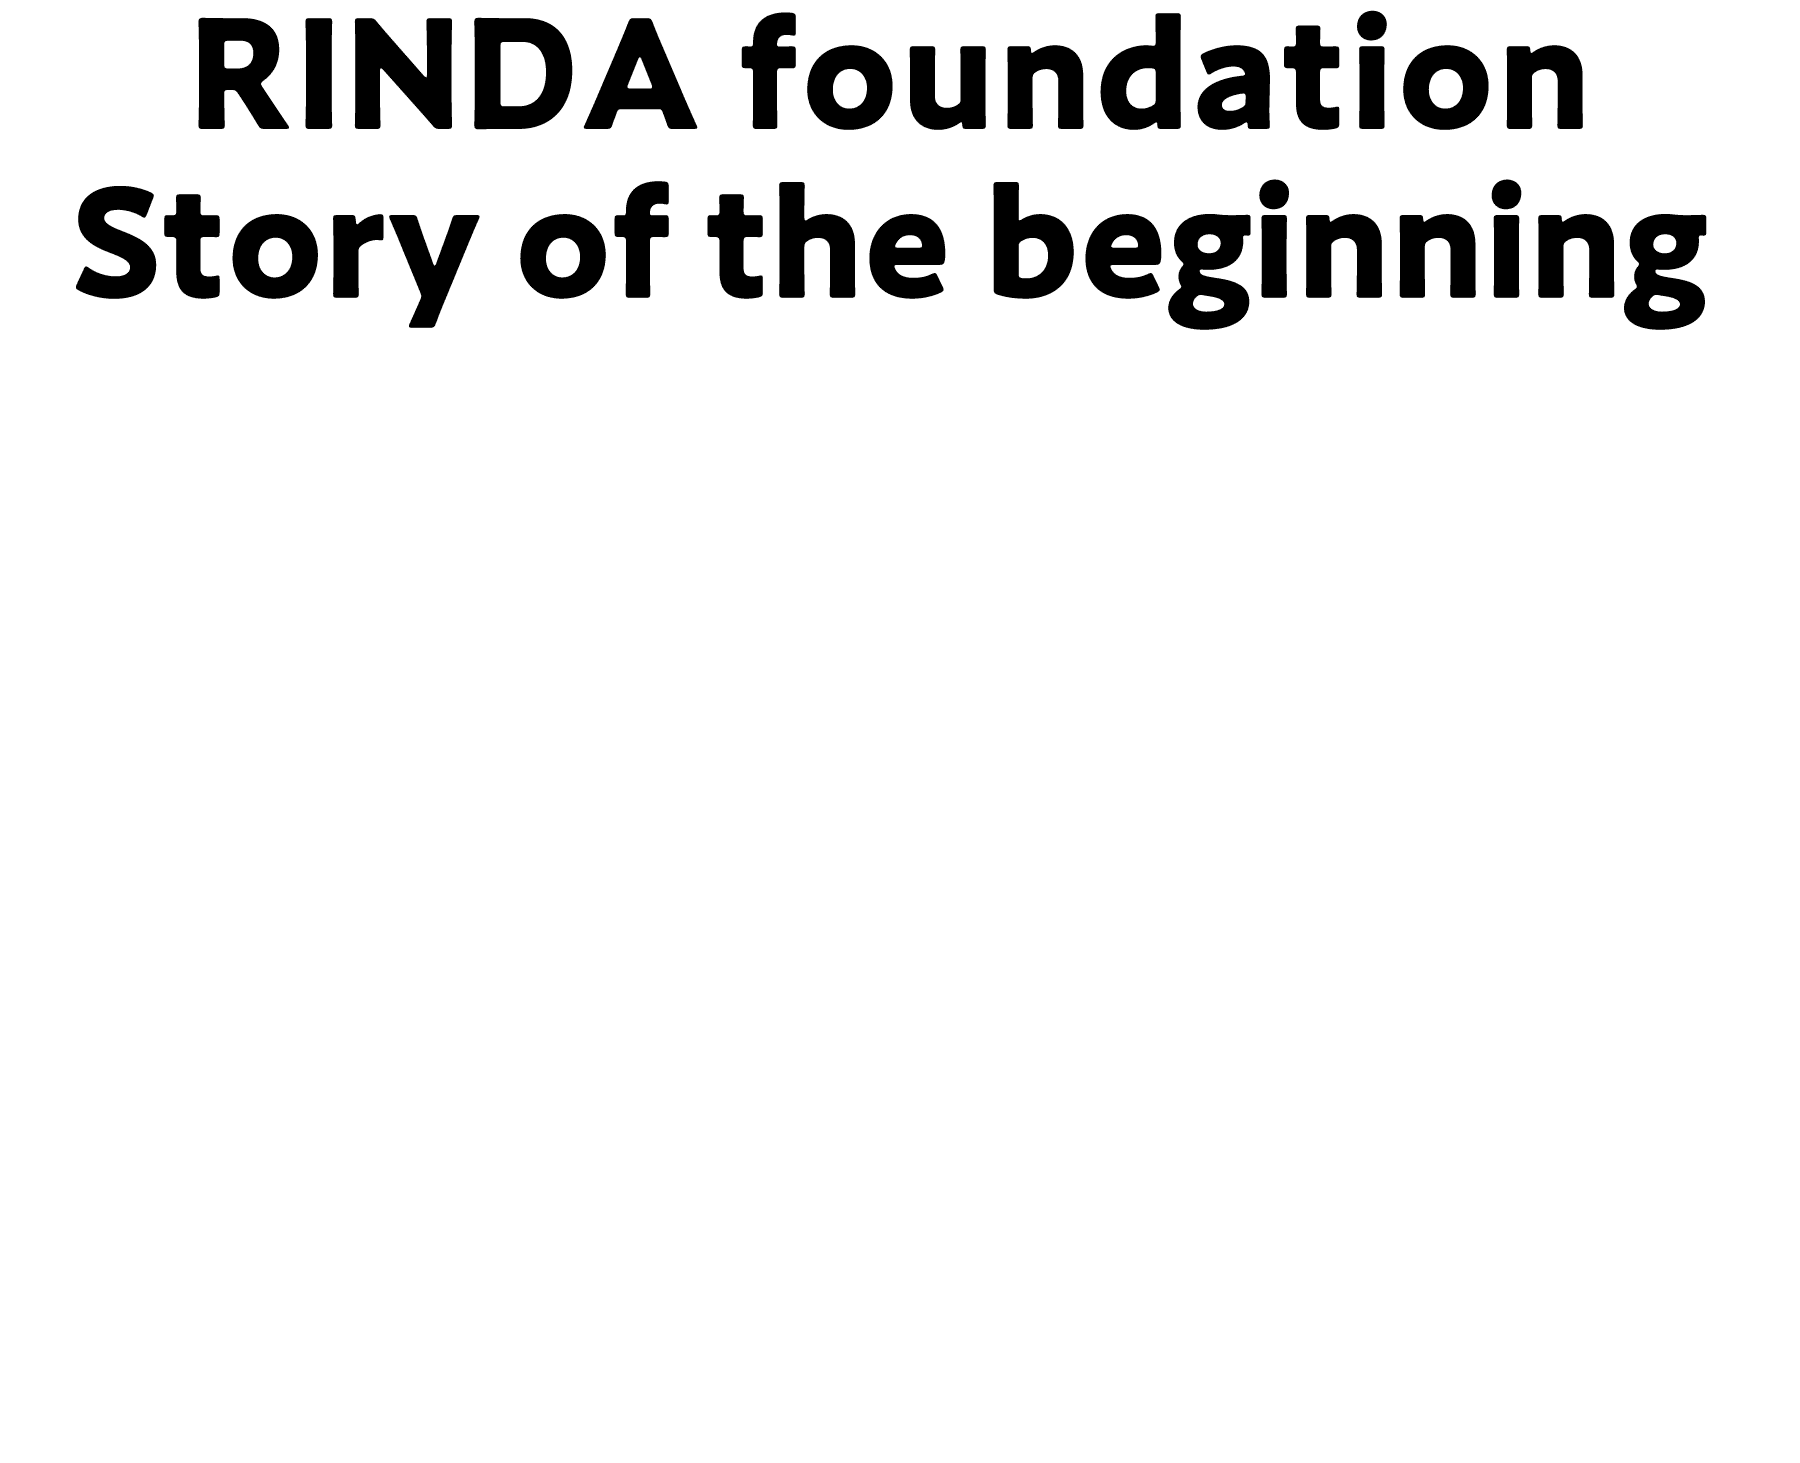 RINDA foundation Story of the beginning